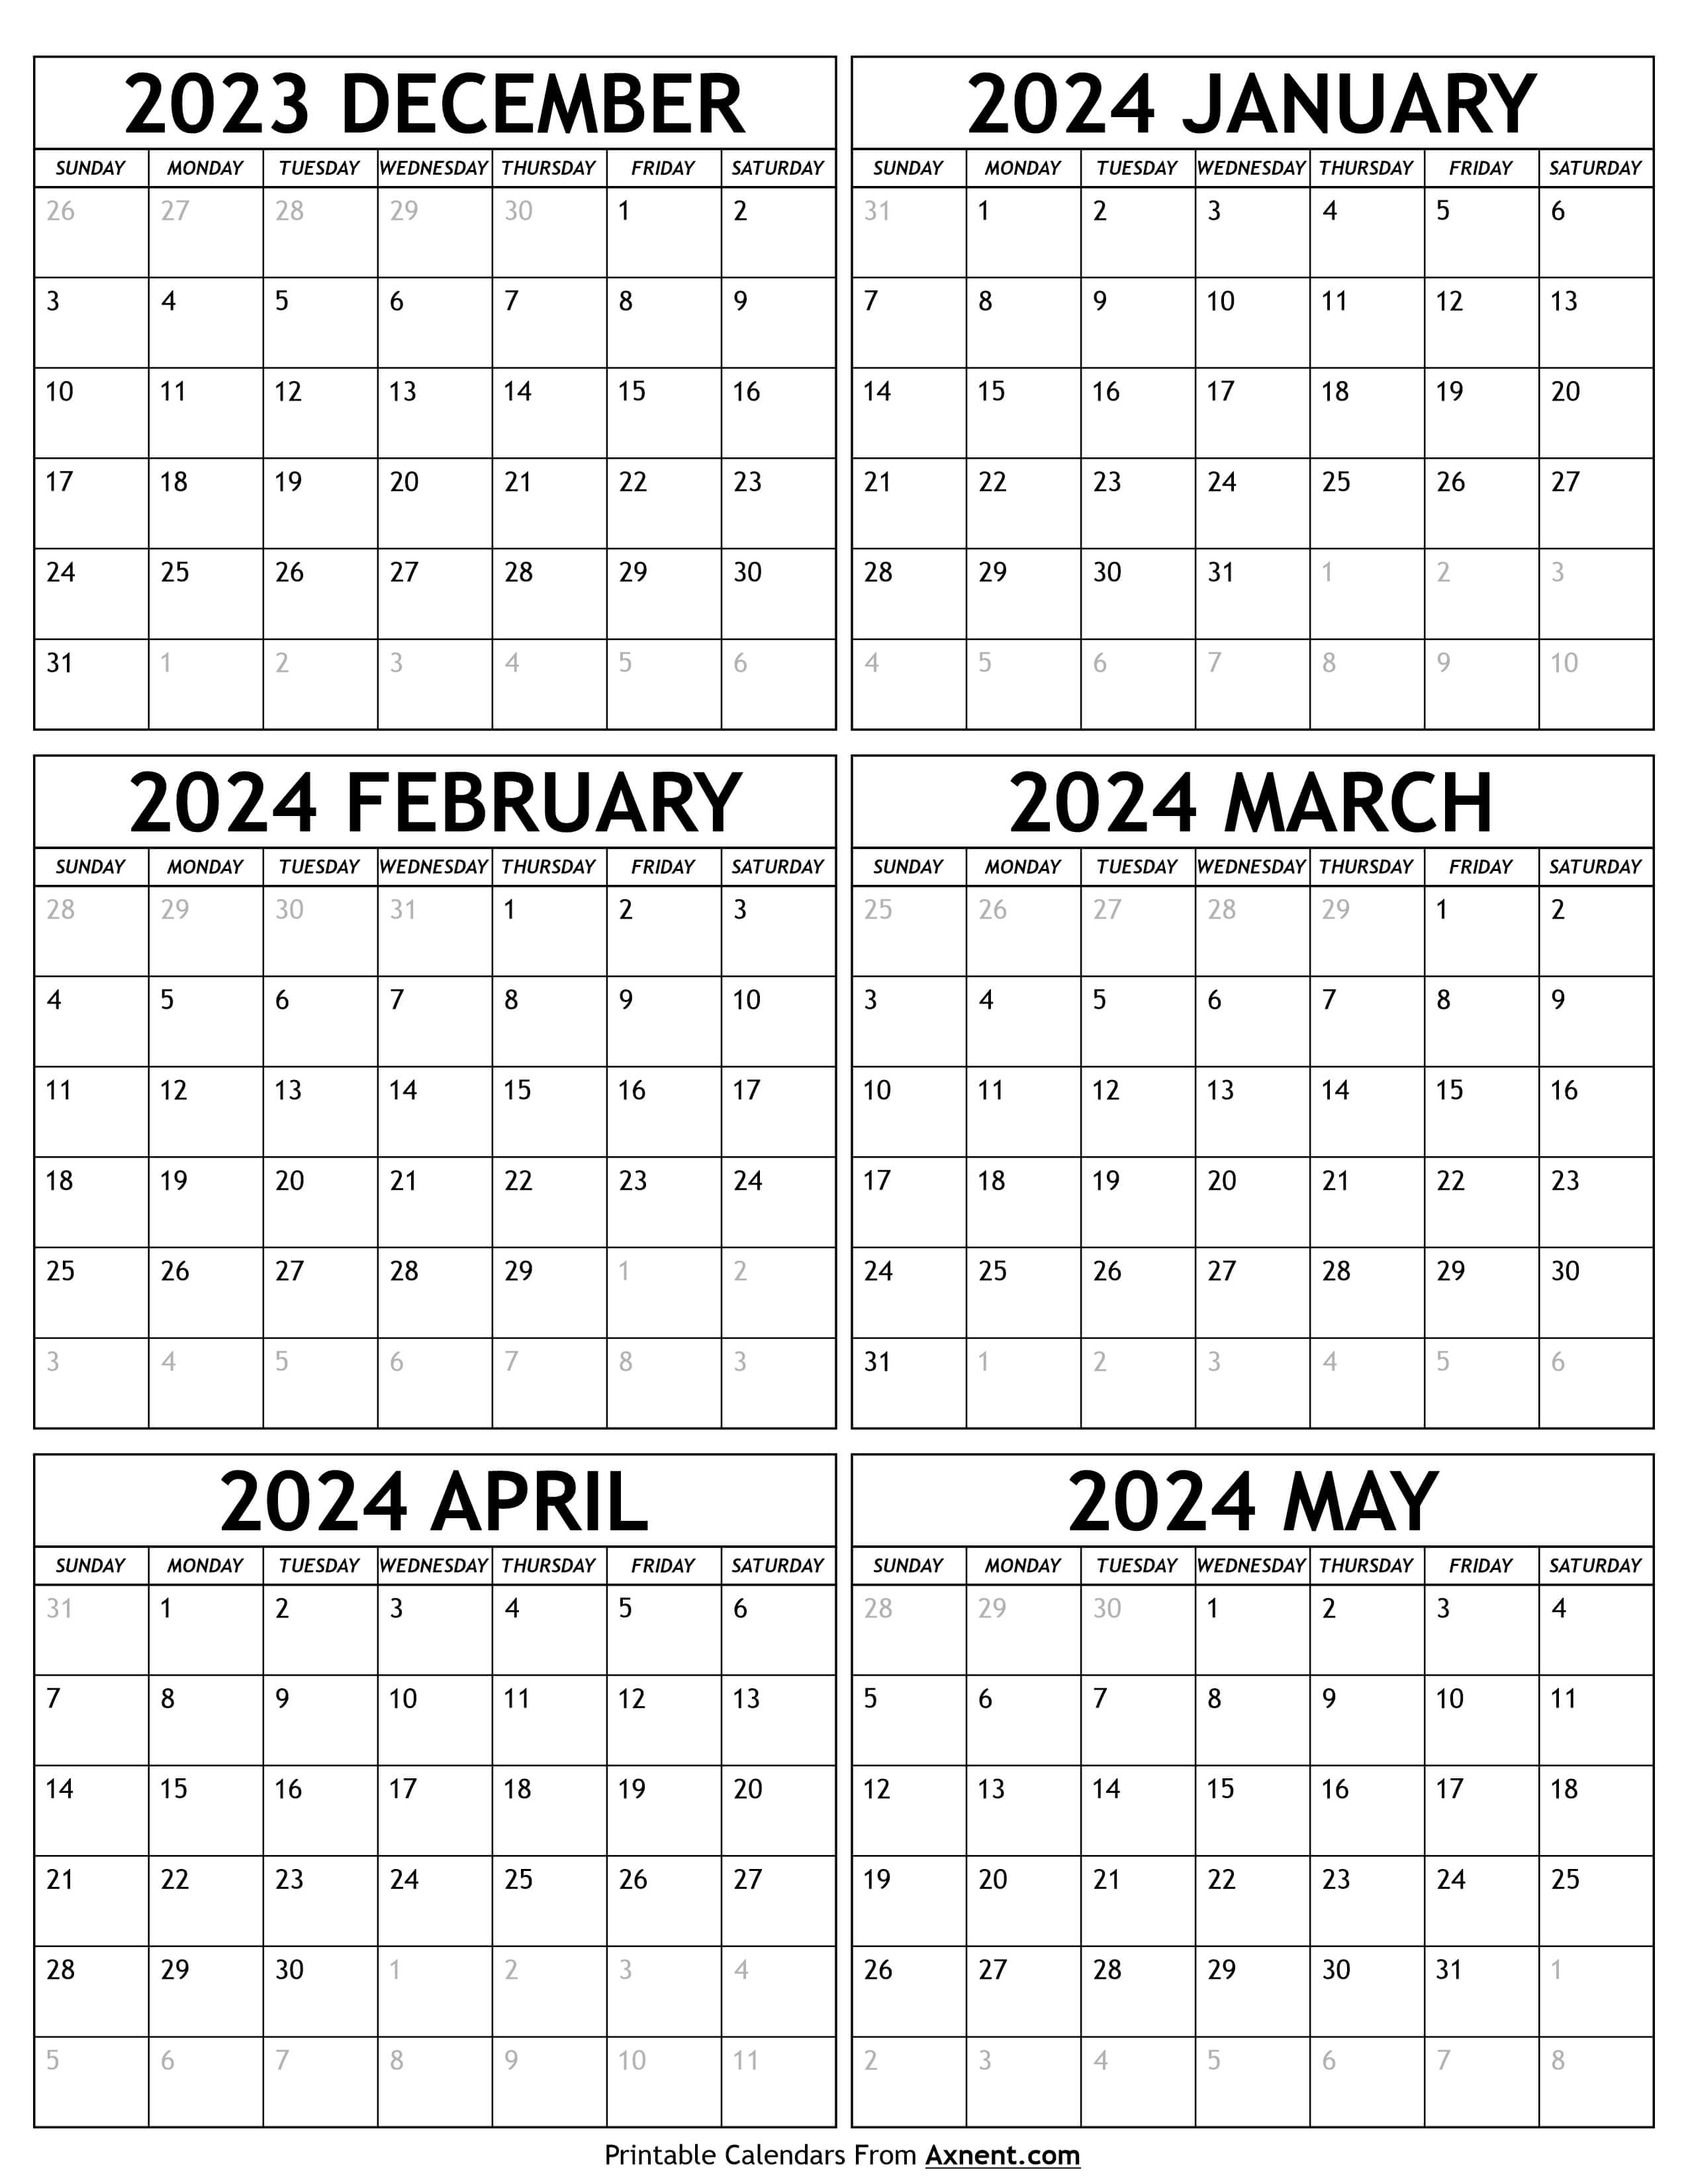 December 2023 to May 2024 Calendar